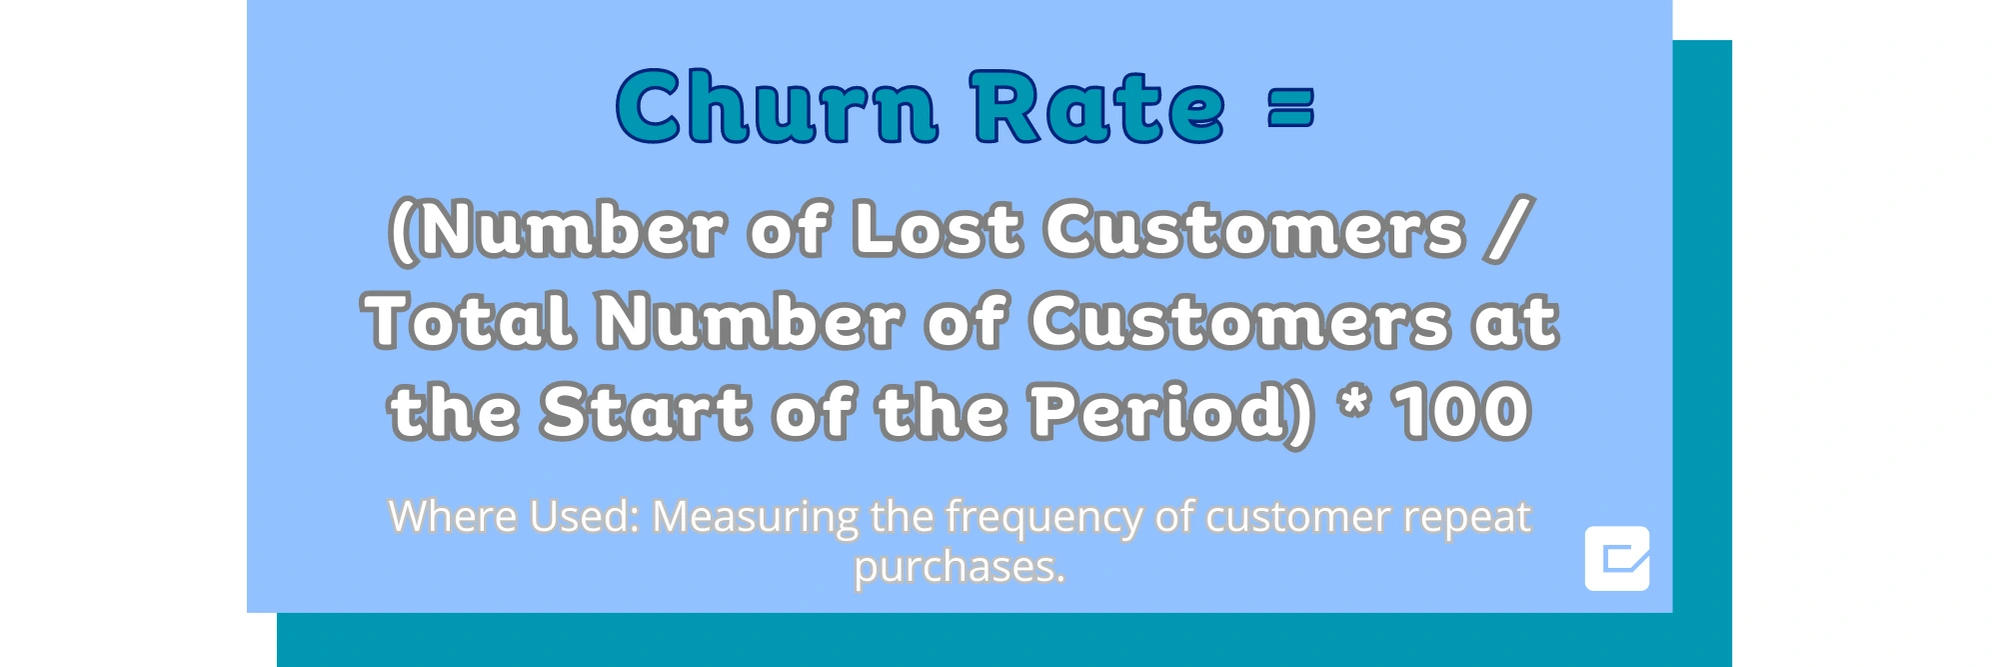 Churn Rate in Amazon KPI metrics